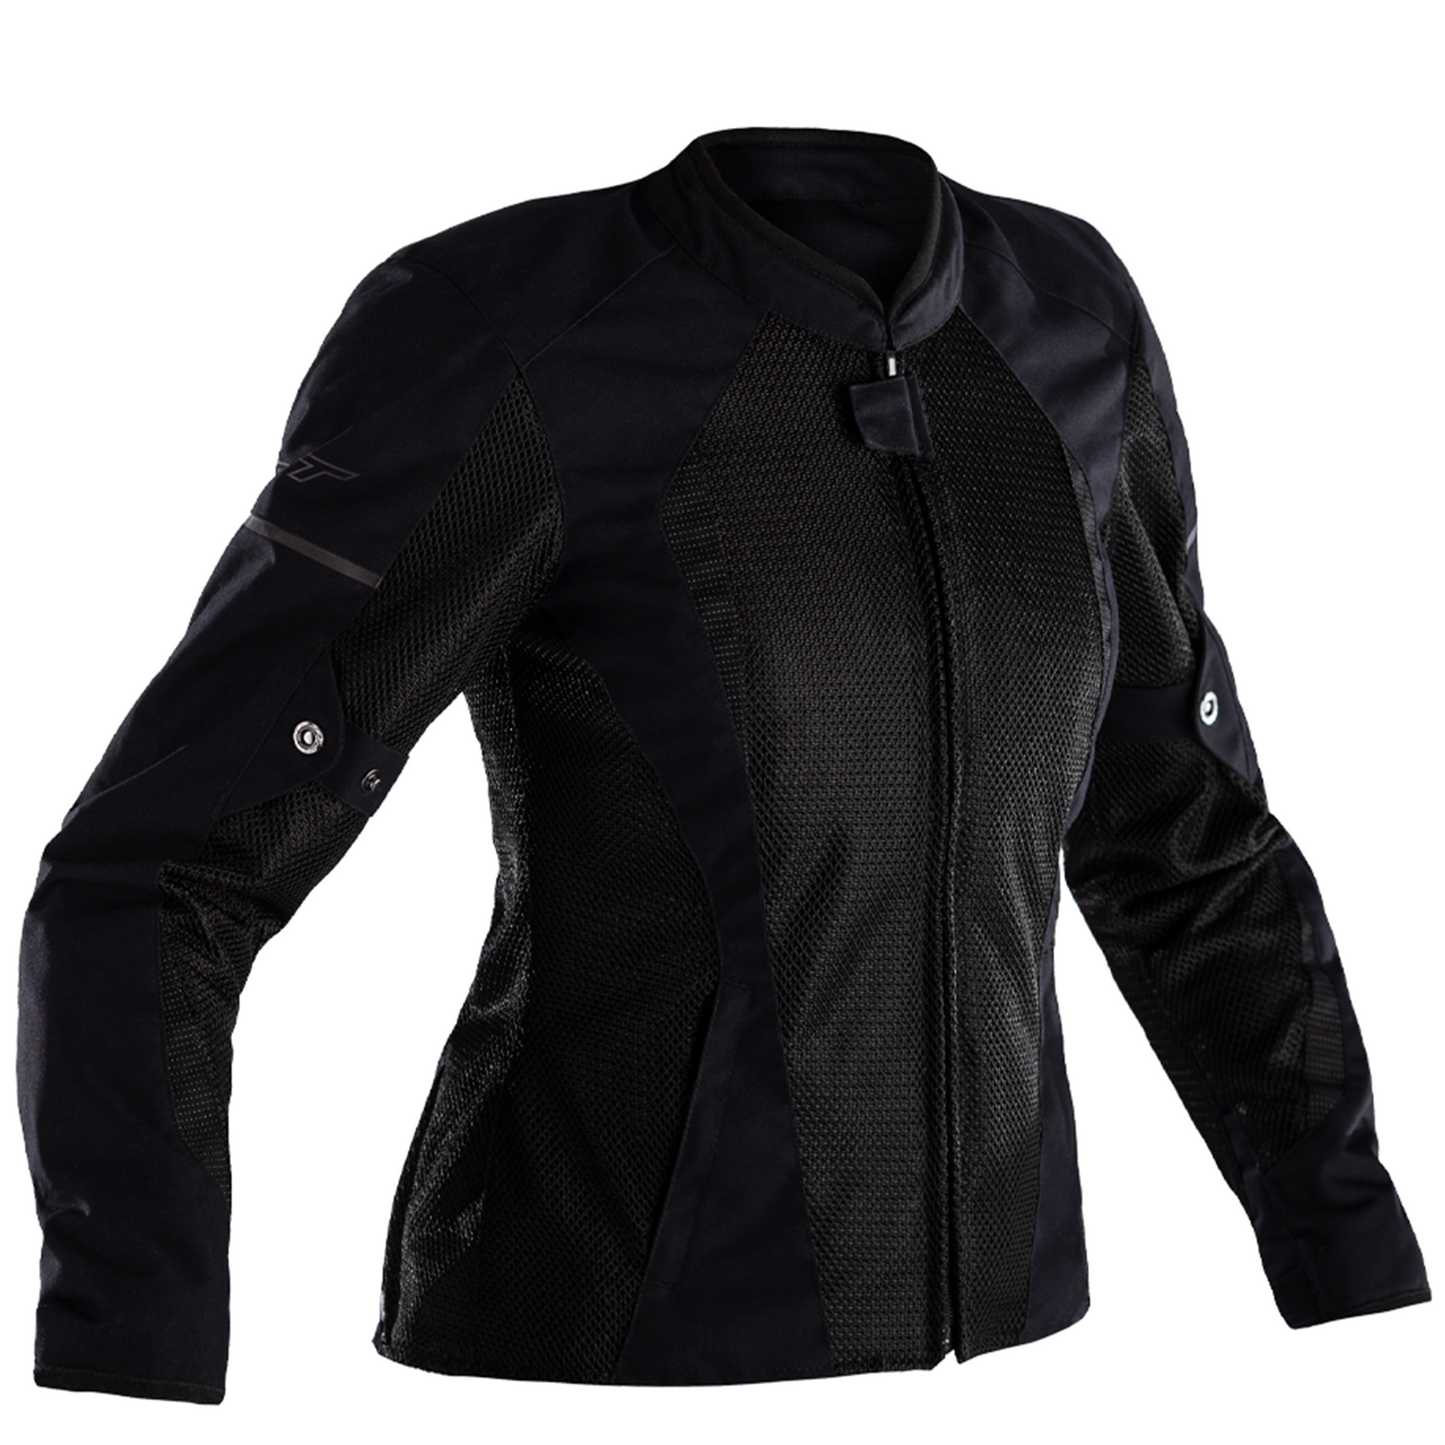 RST F-Lite CE Ladies Textile Jacket - Black (2575)